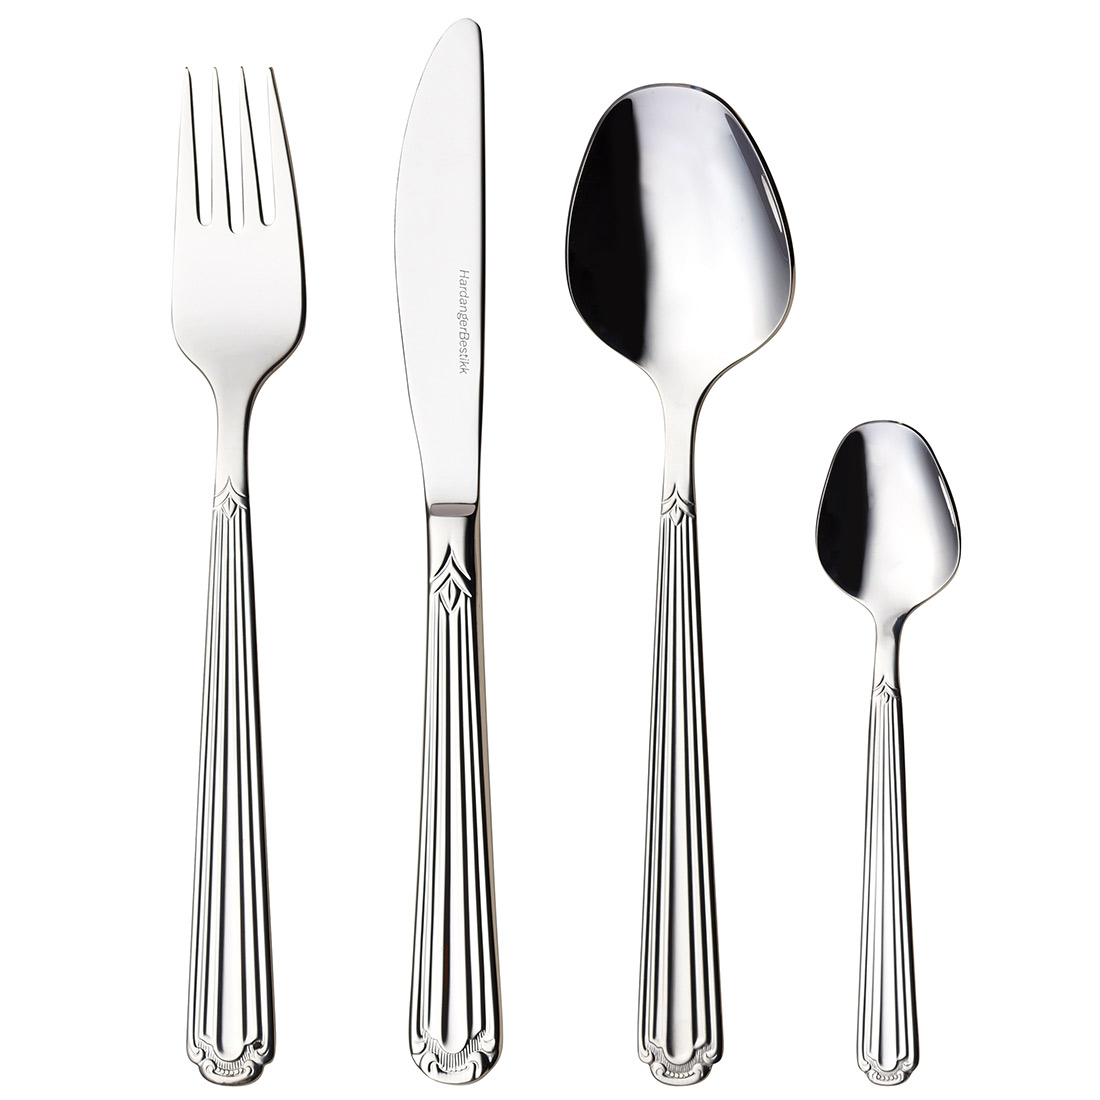 Renessanse cutlery set product image